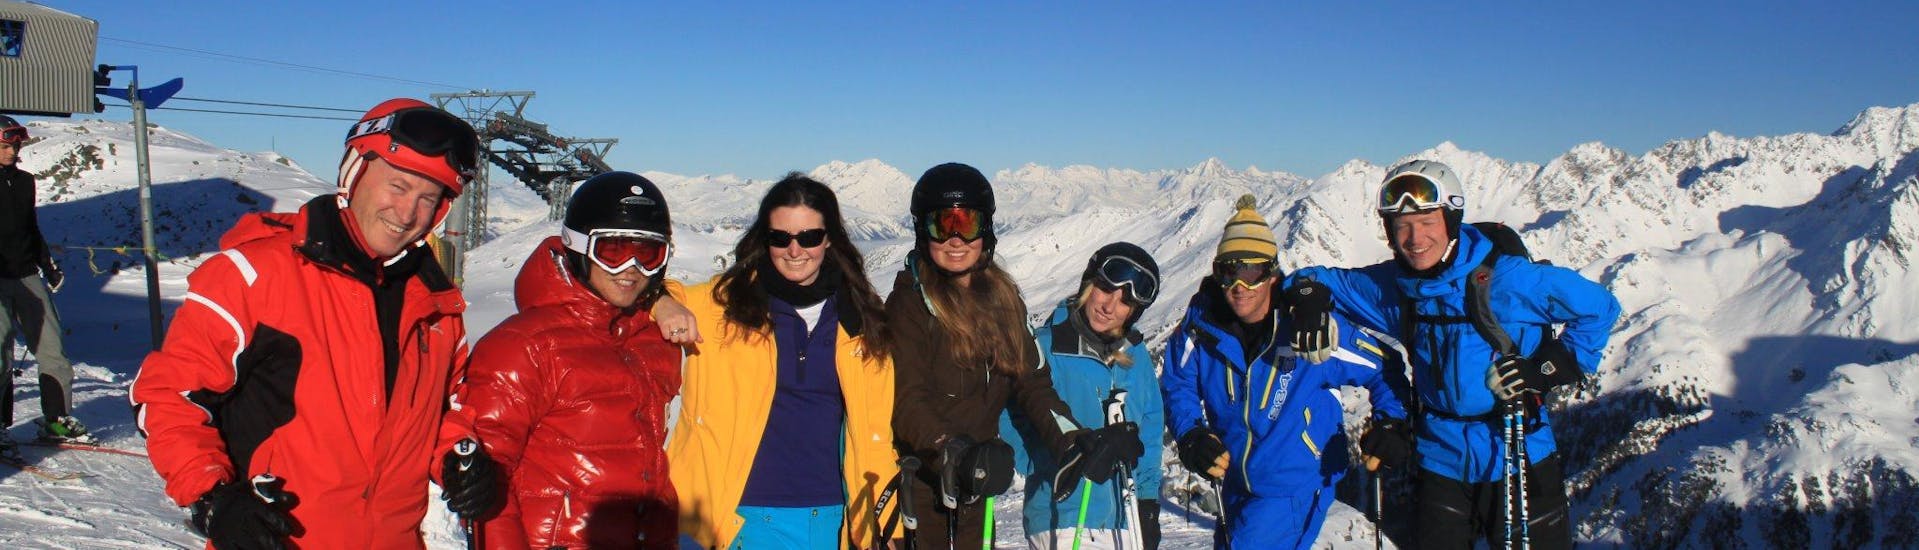 Lezioni di sci per adulti a partire da 16 anni per tutti i livelli.